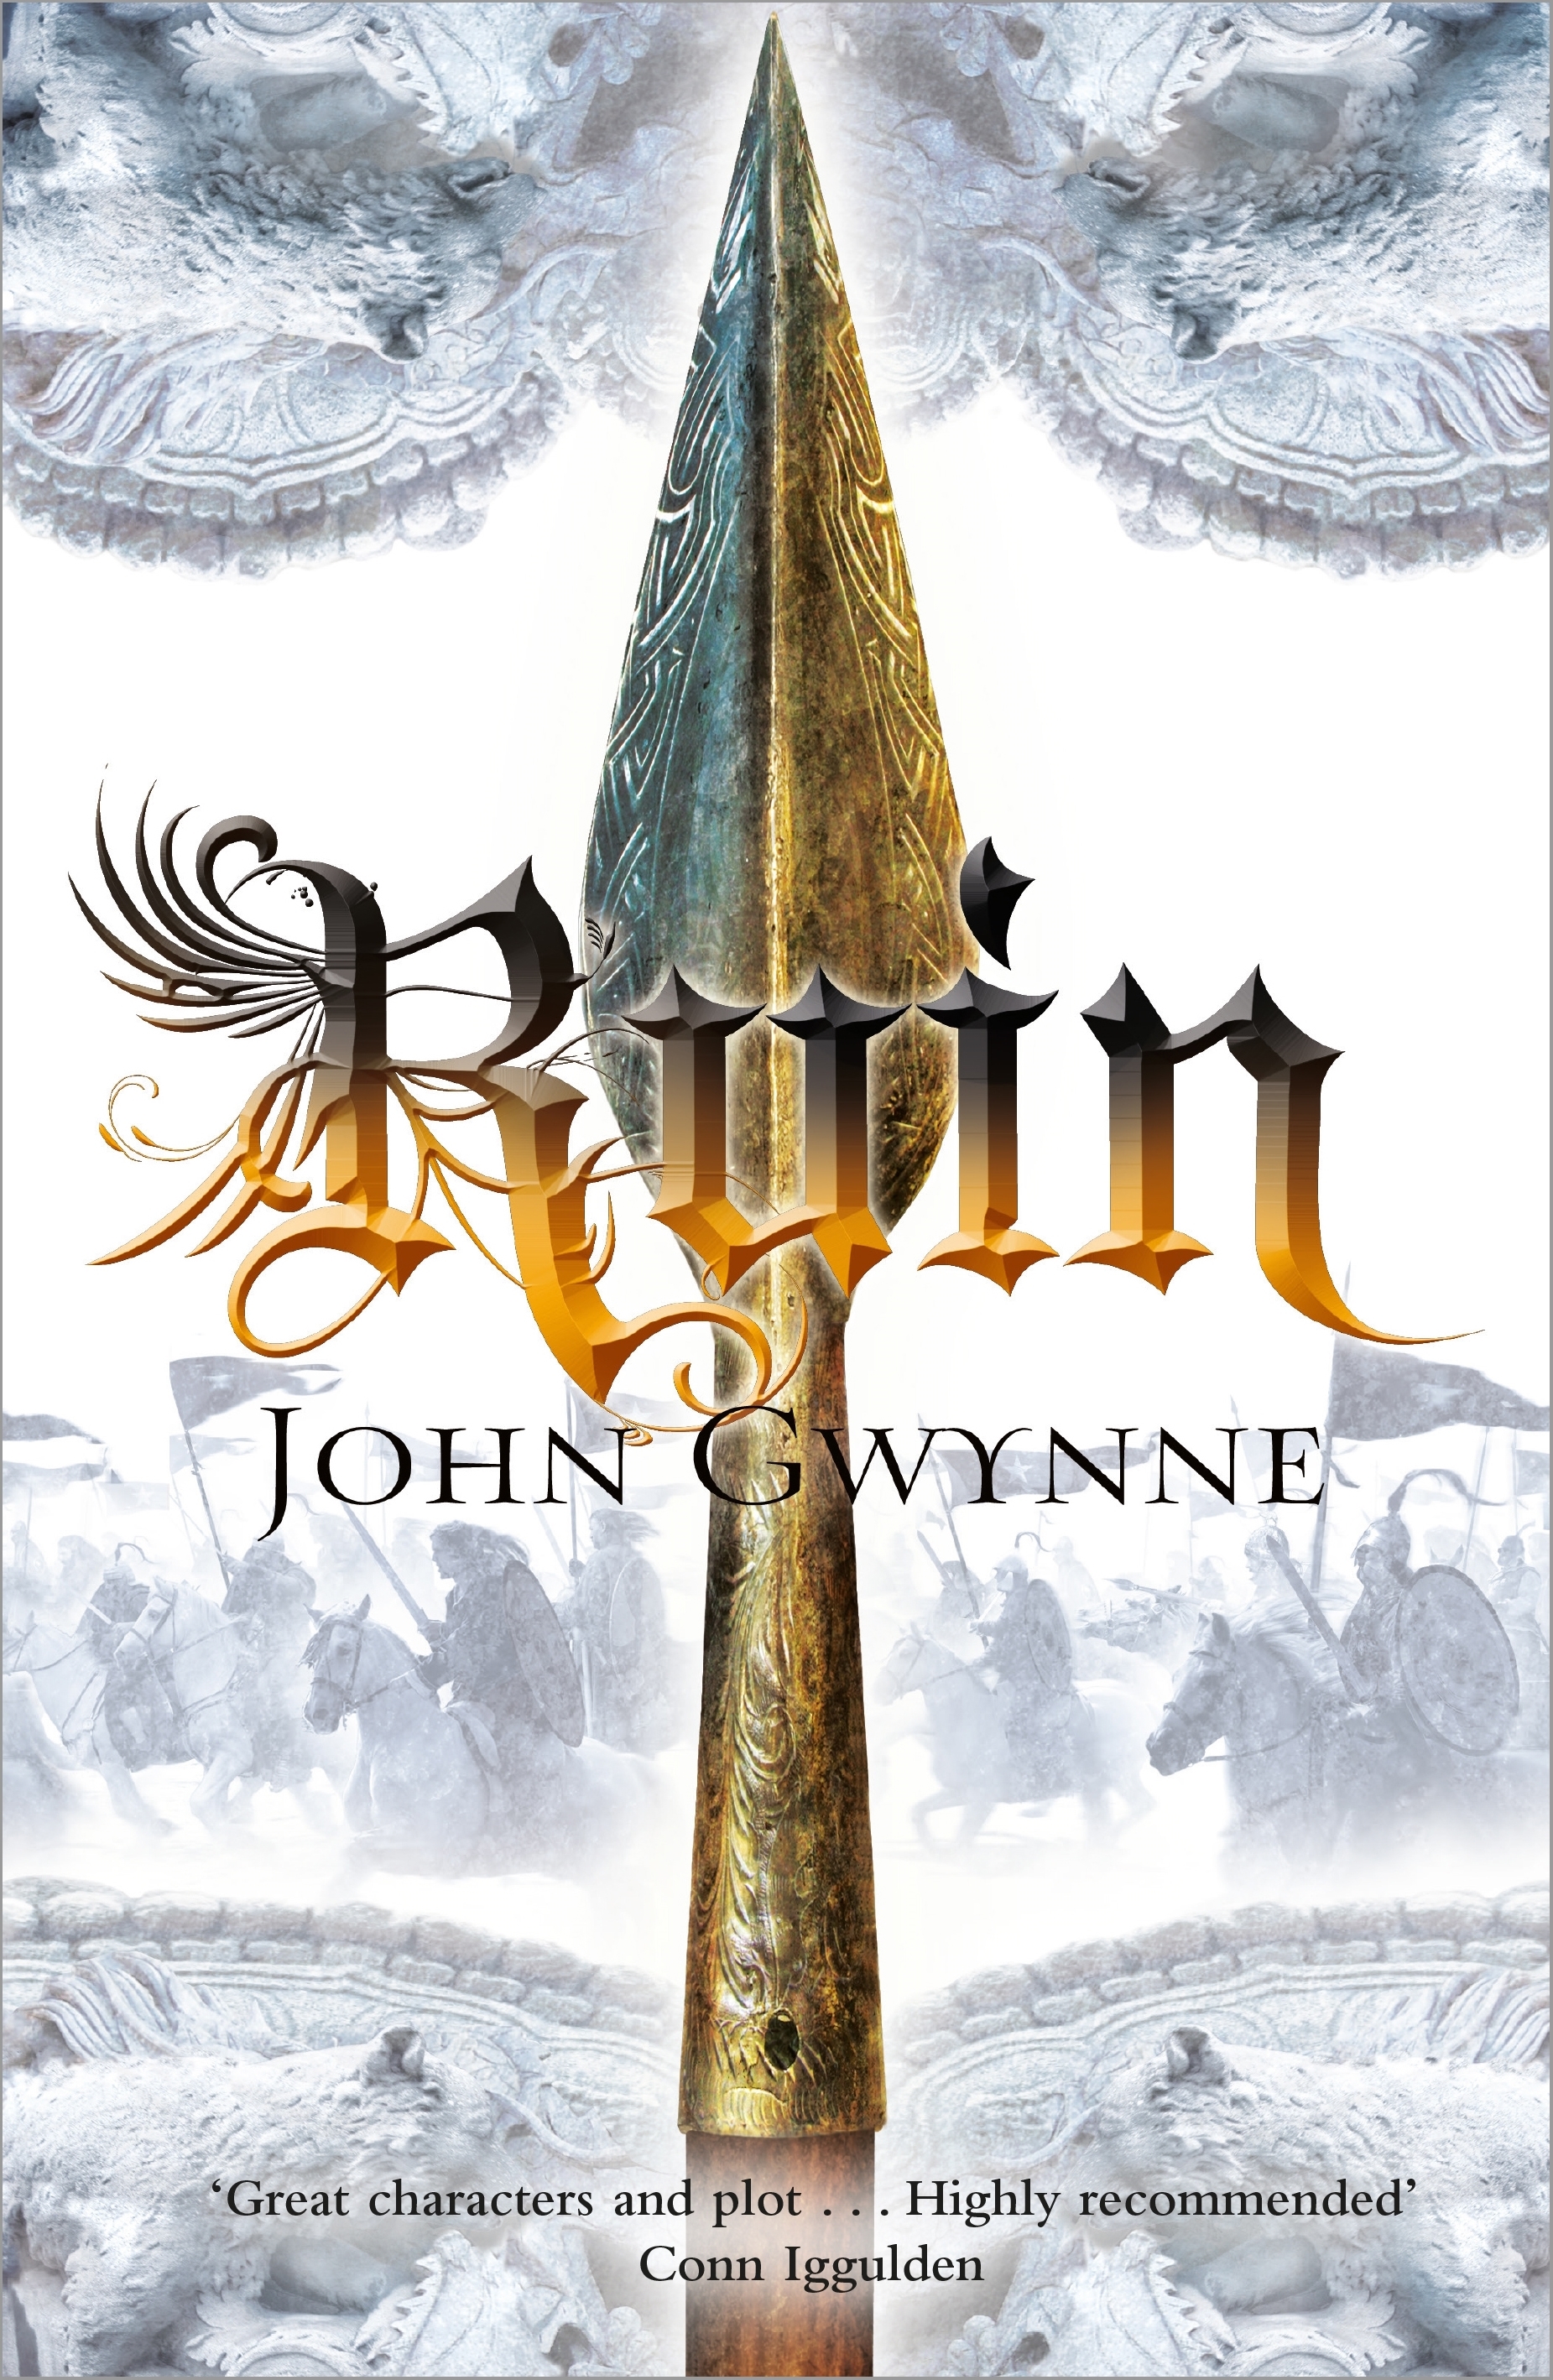 John Gwynne: Ruin (2016, Pan Macmillan)